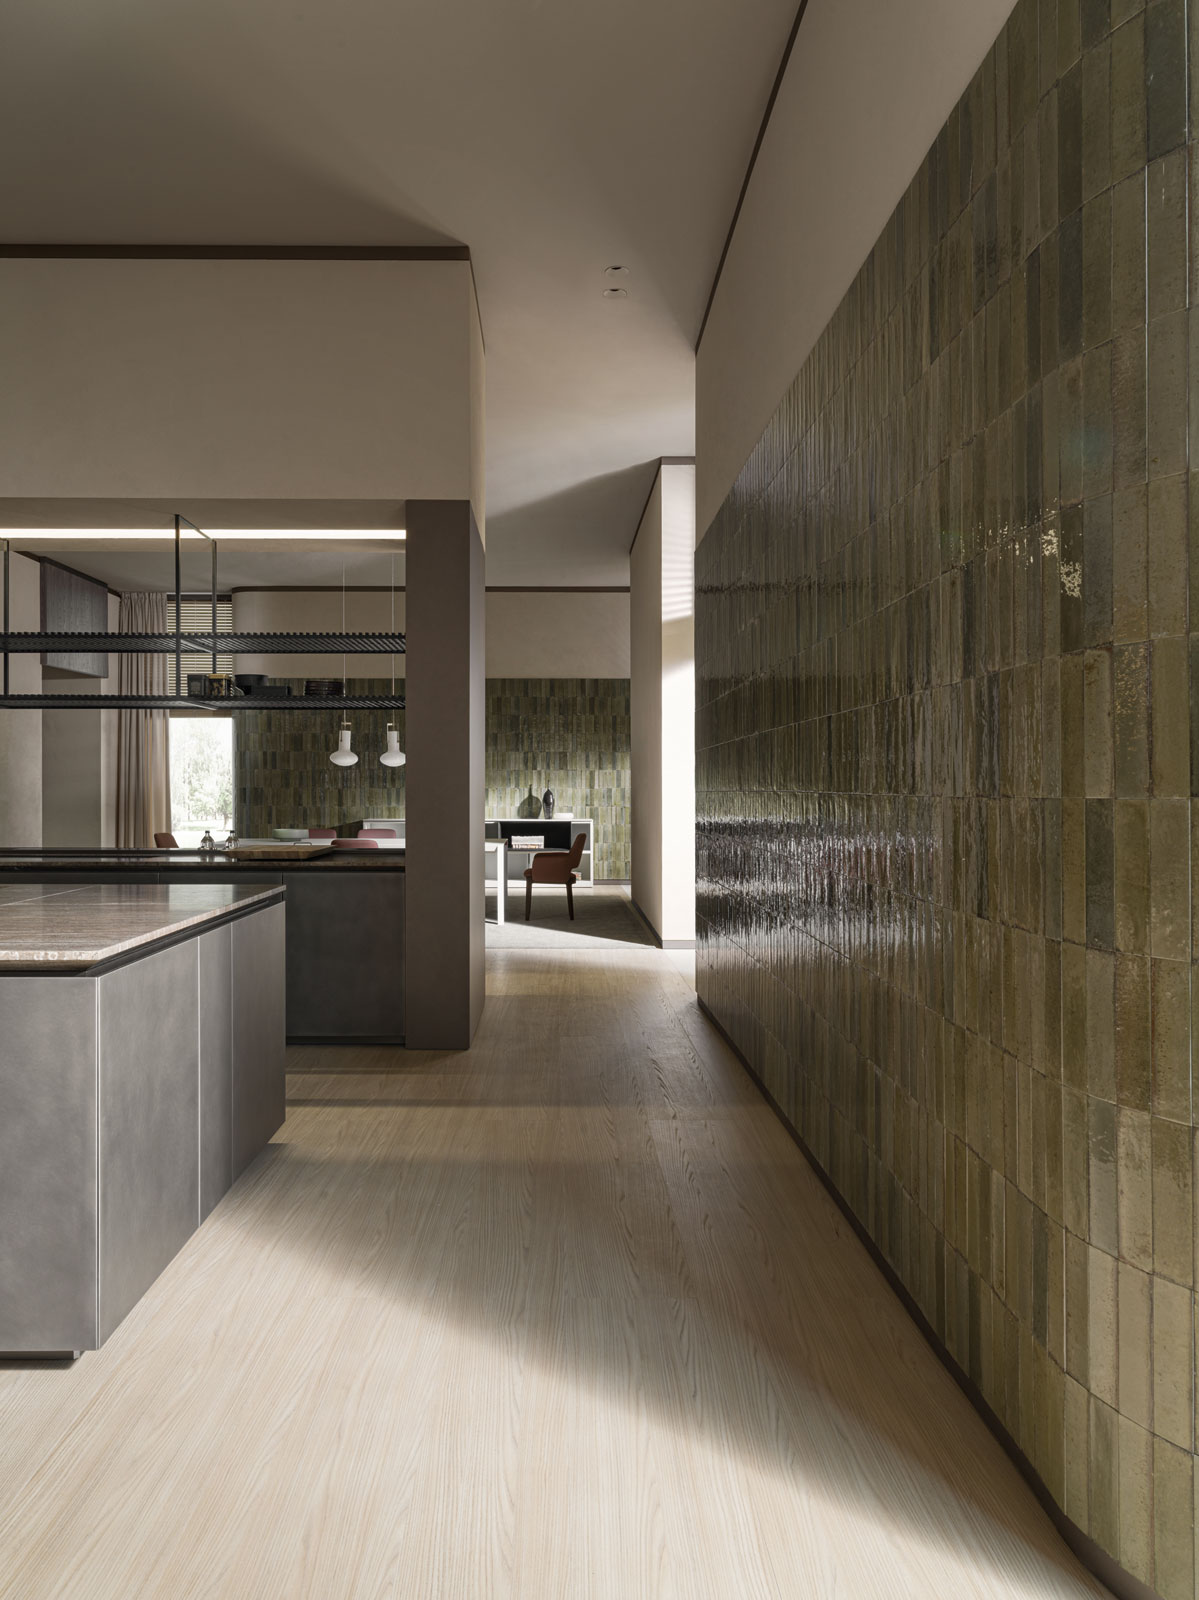 Intersection kitchen designed by Vincent Van Duysen